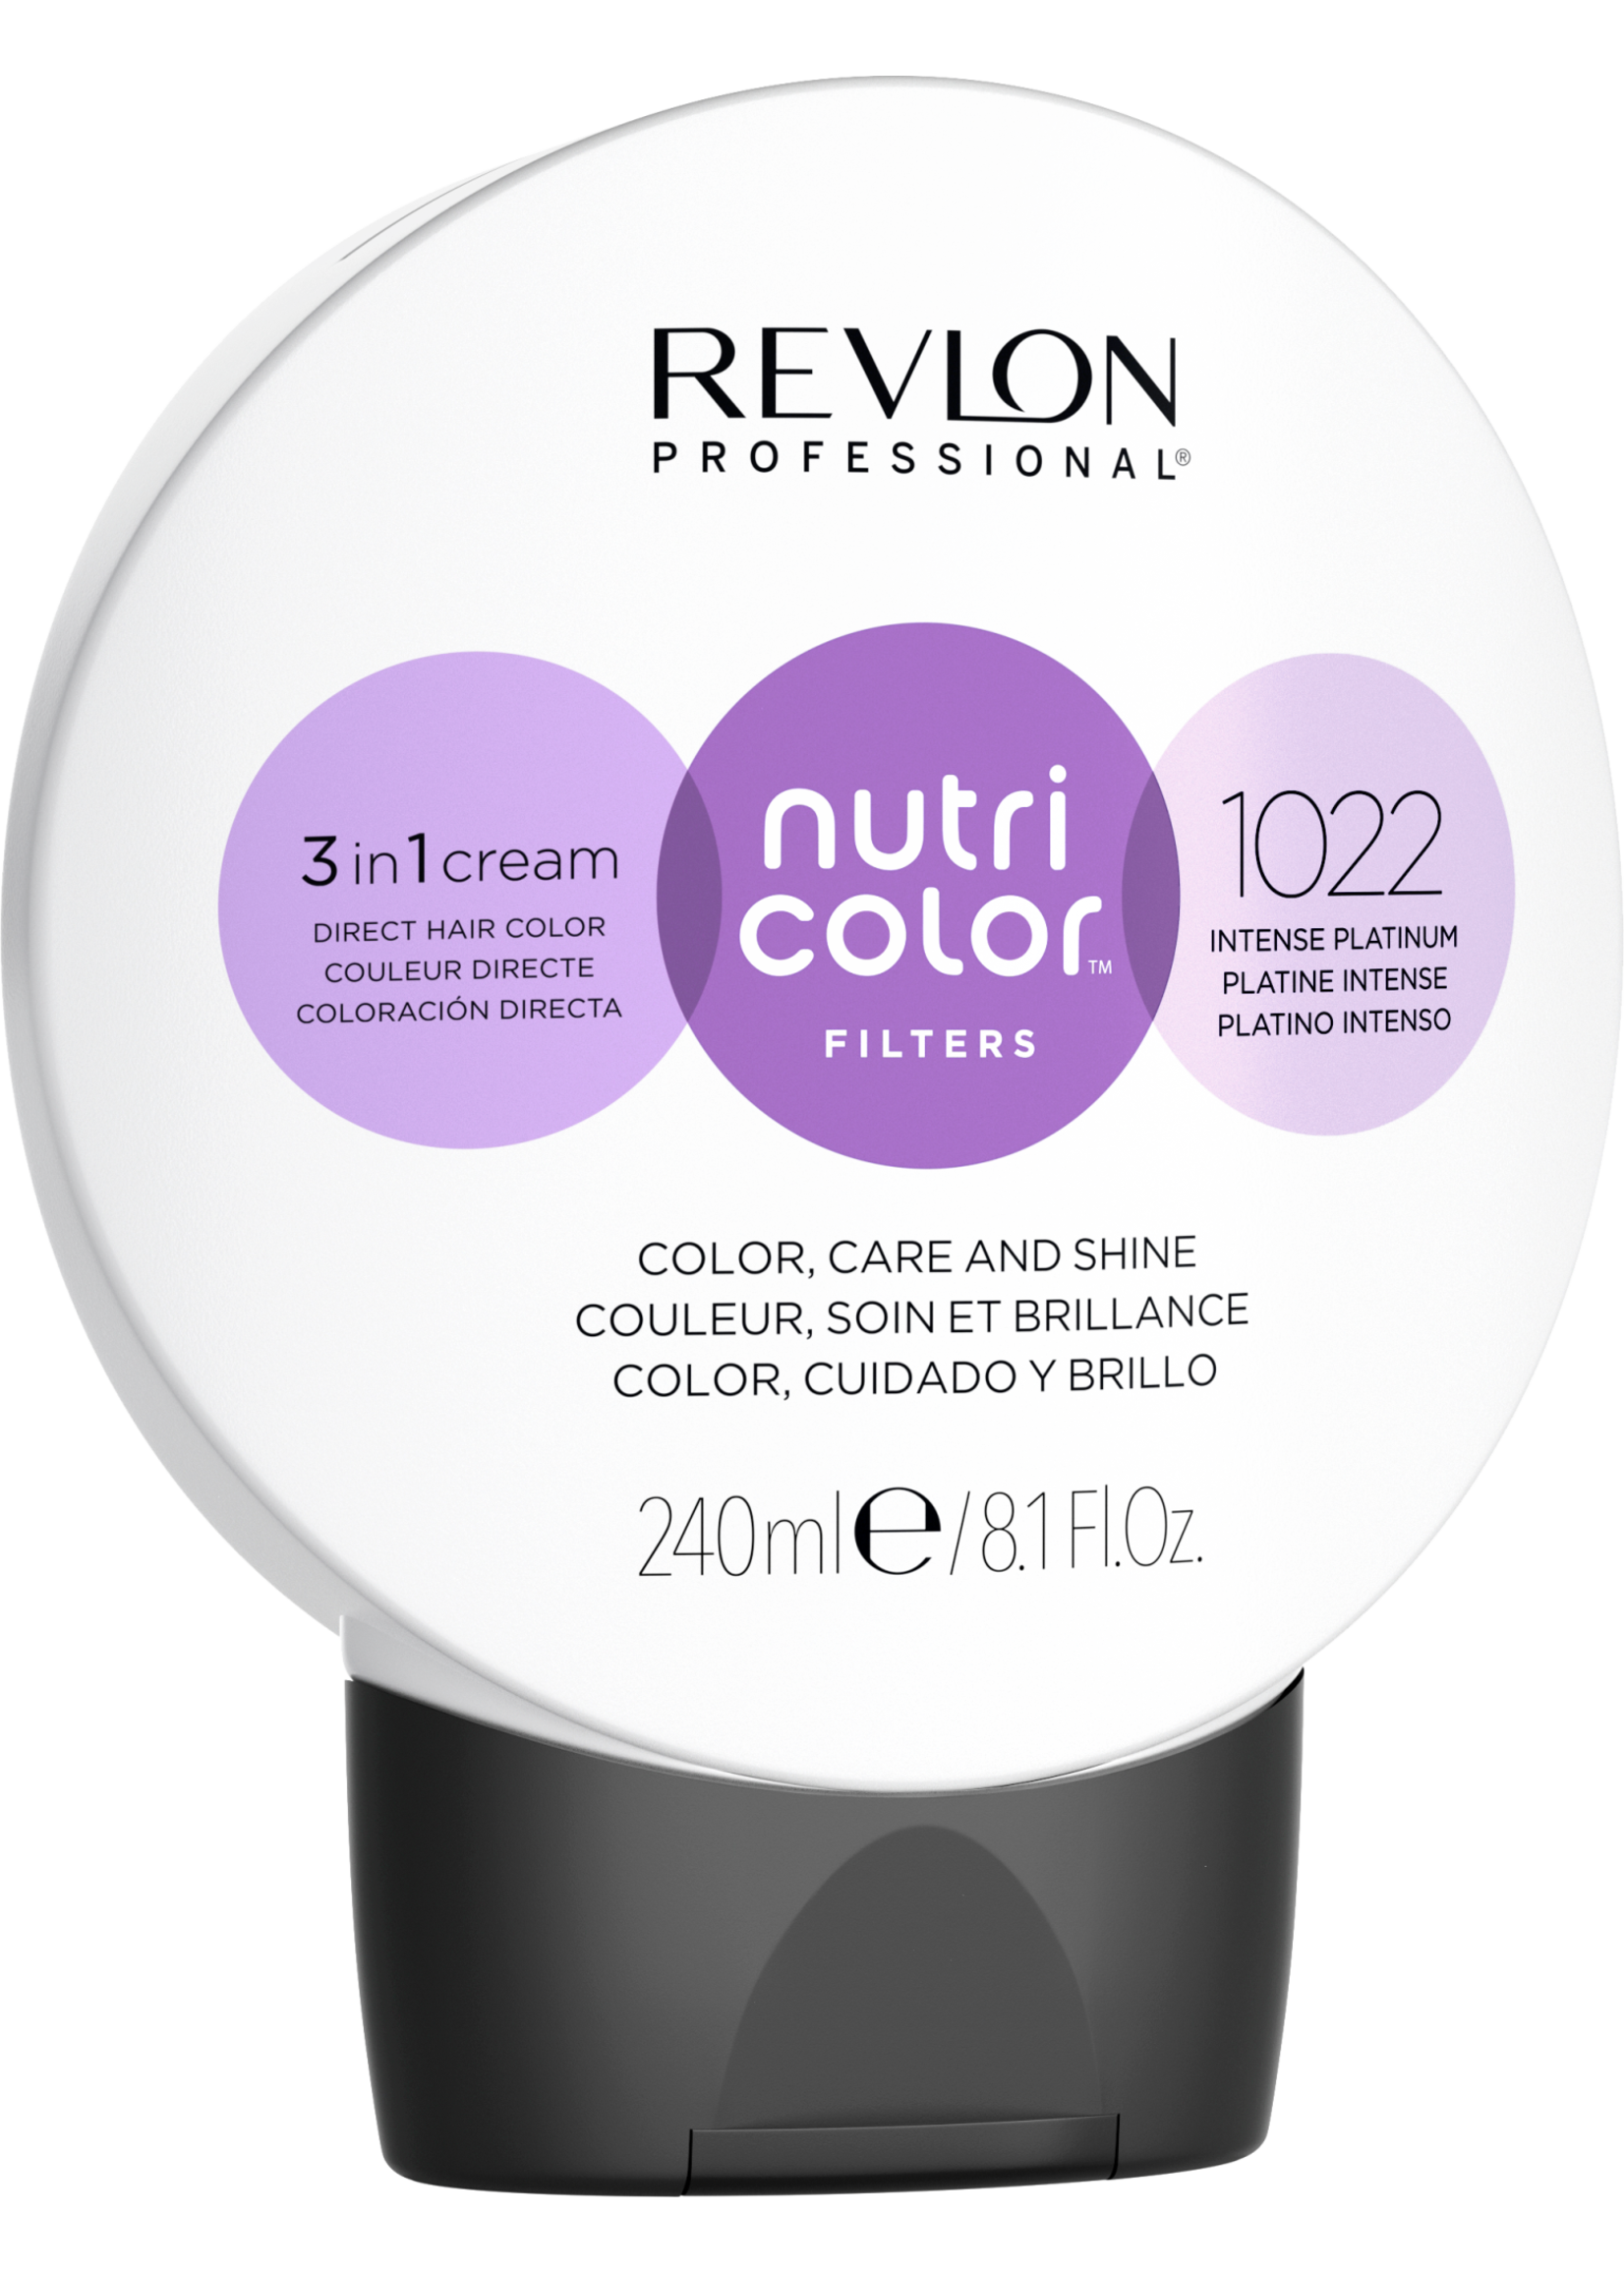 Revlon Professional Revlon Professional Nutri Color Filters 1022 Intense Platinum 240ml